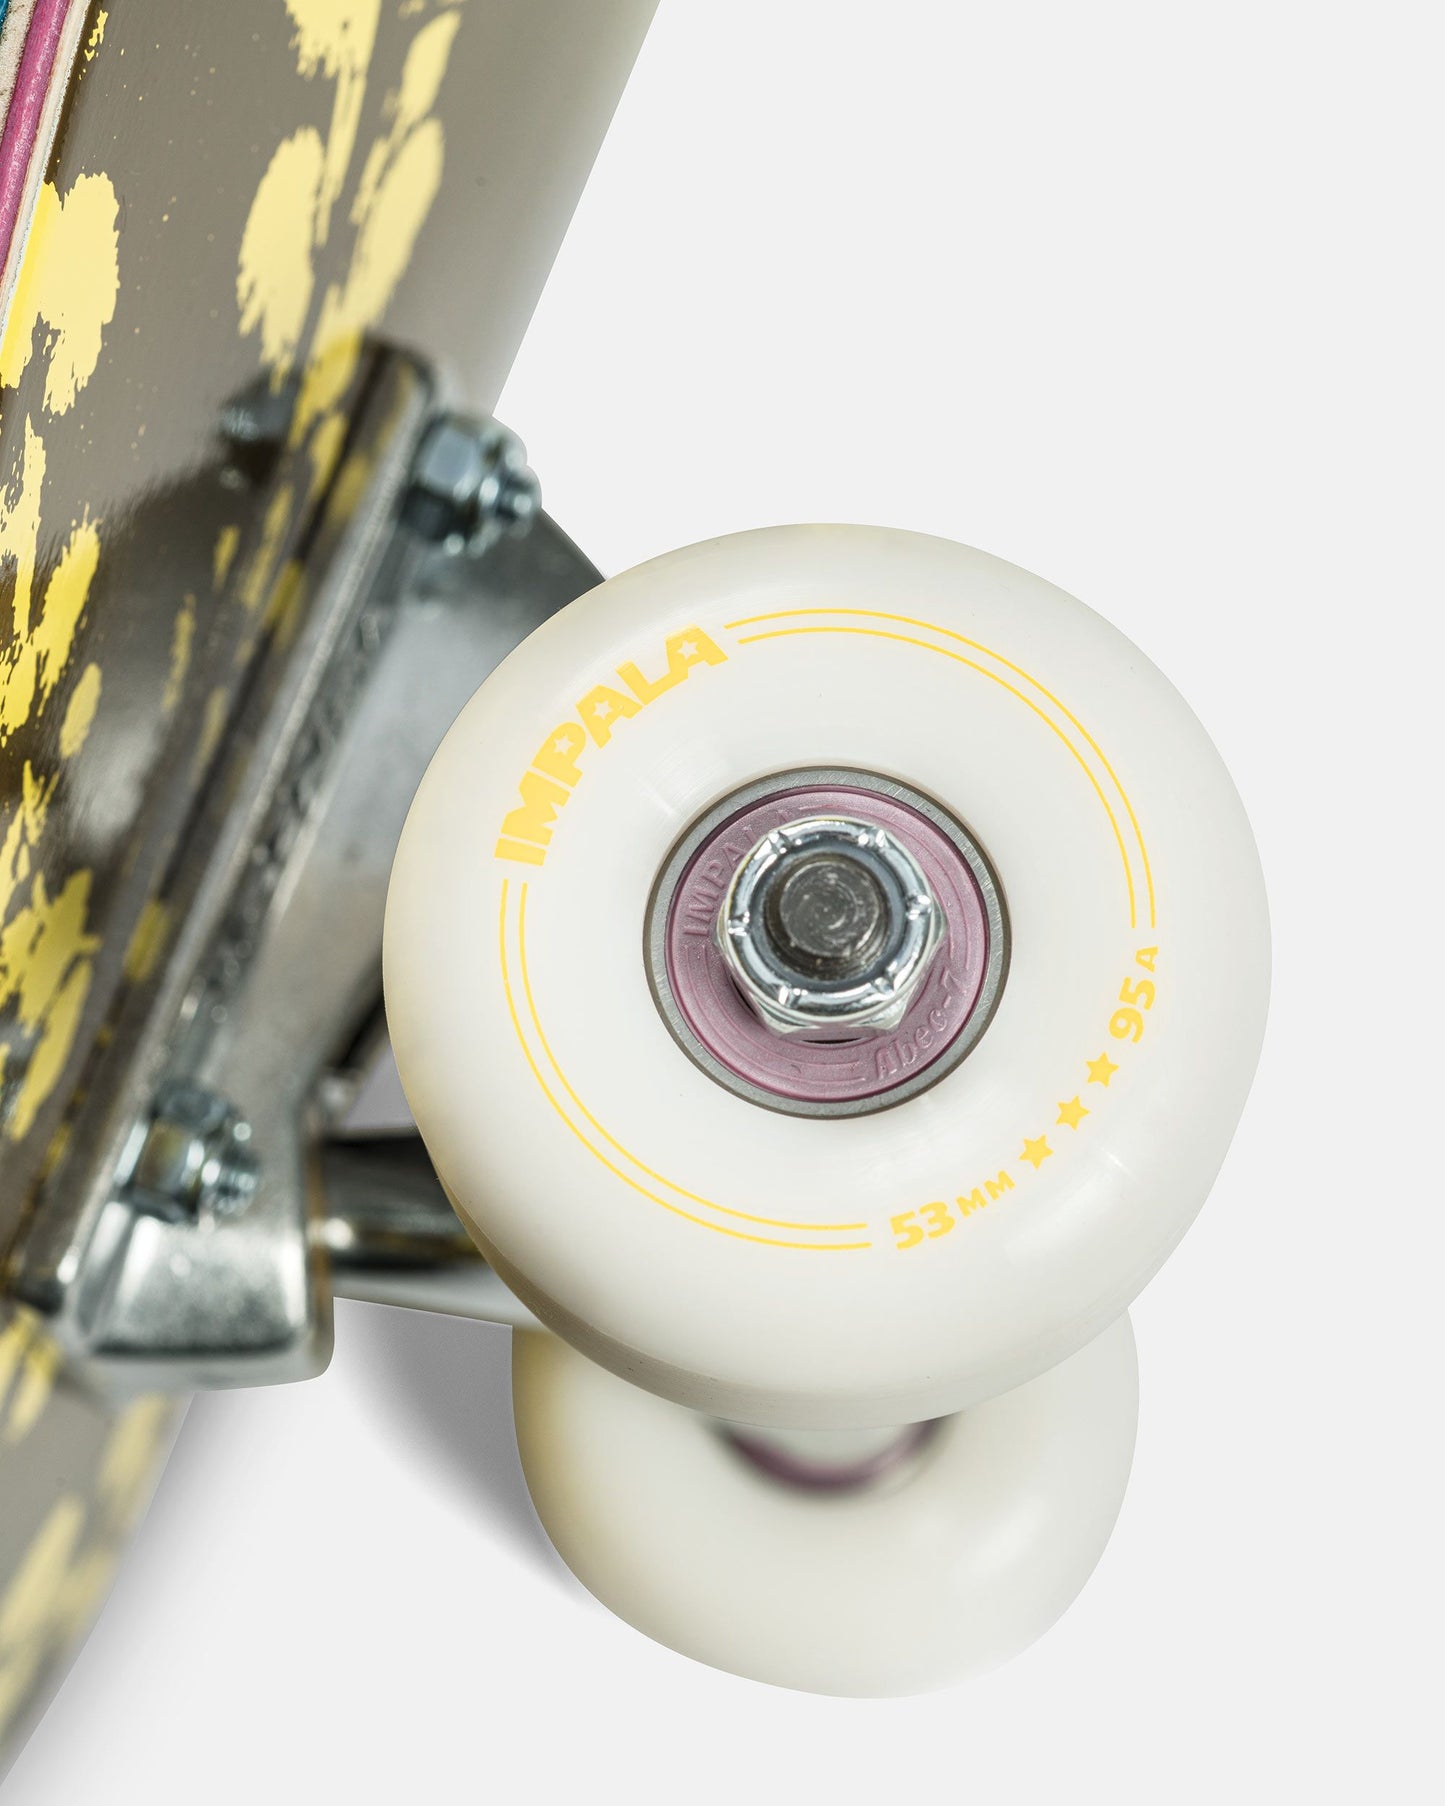 Wheel and bearing detailing of Impala Blossom Skateboard - Wattle